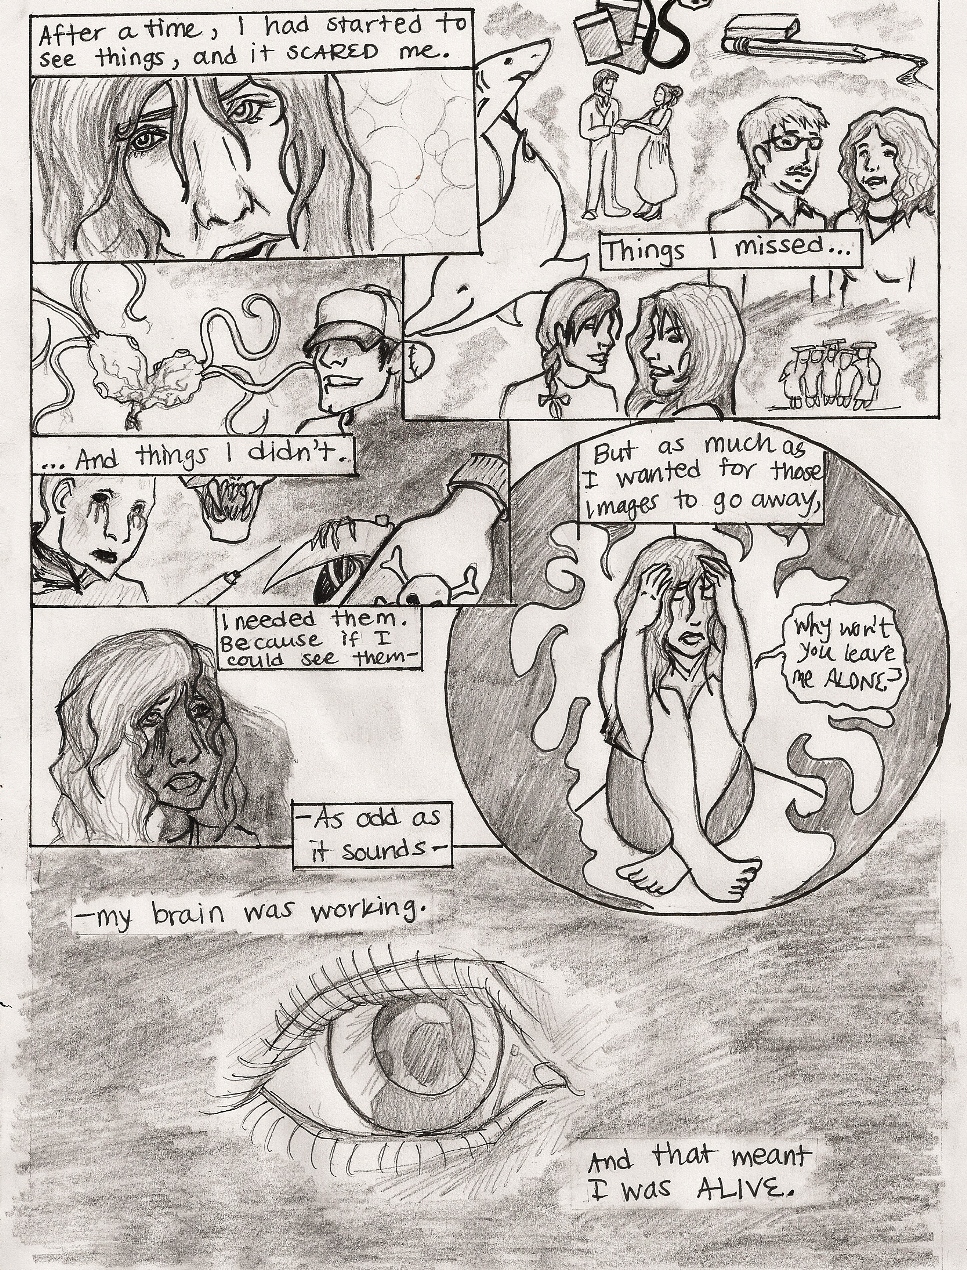 Comic Page 3 by killerrabbit05